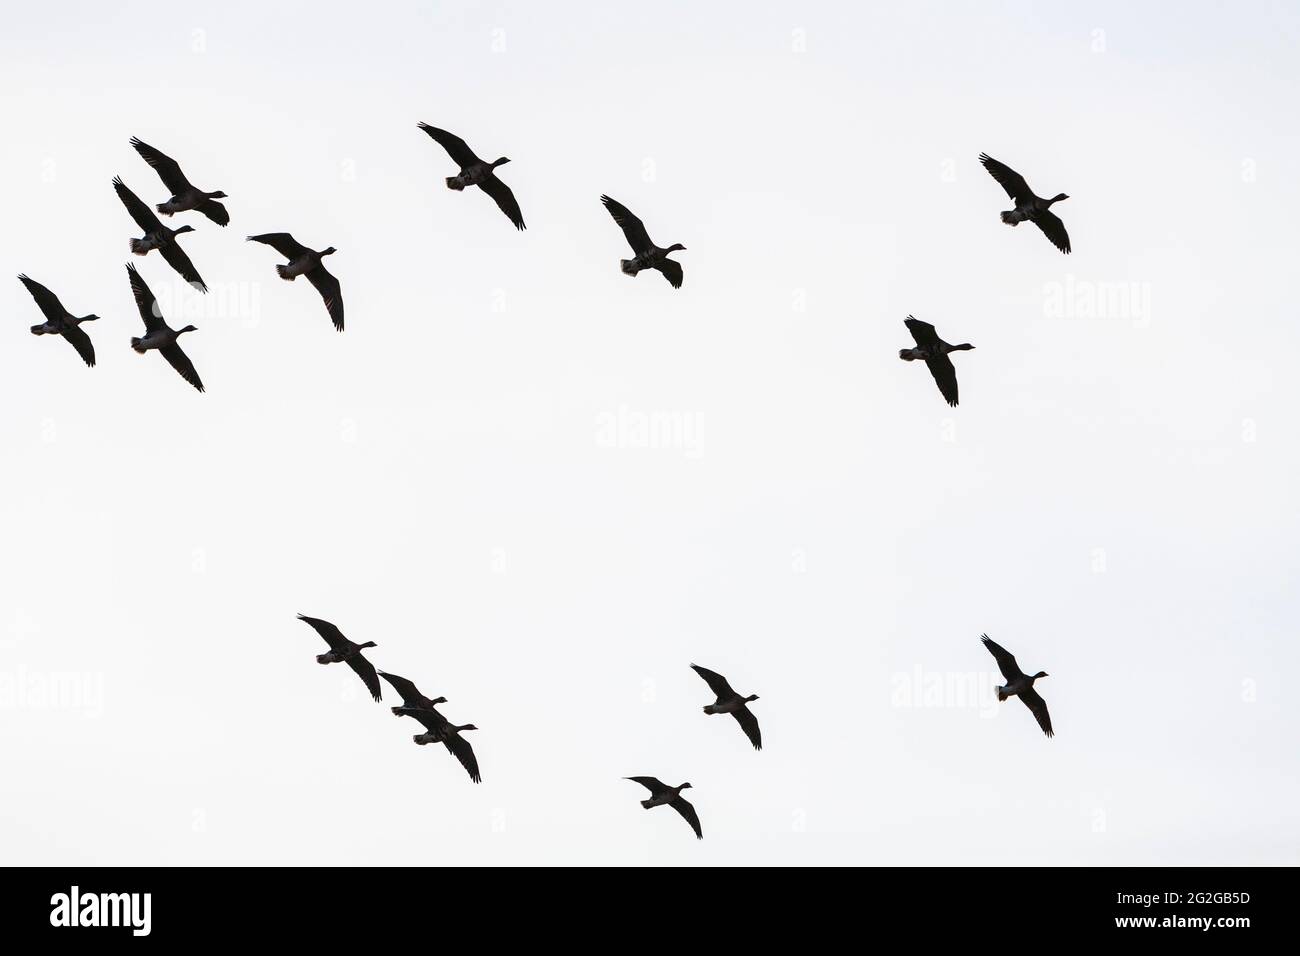 Europe, Poland, Podlaskie Voivodeship, Greylag goose - spring migrations Stock Photo